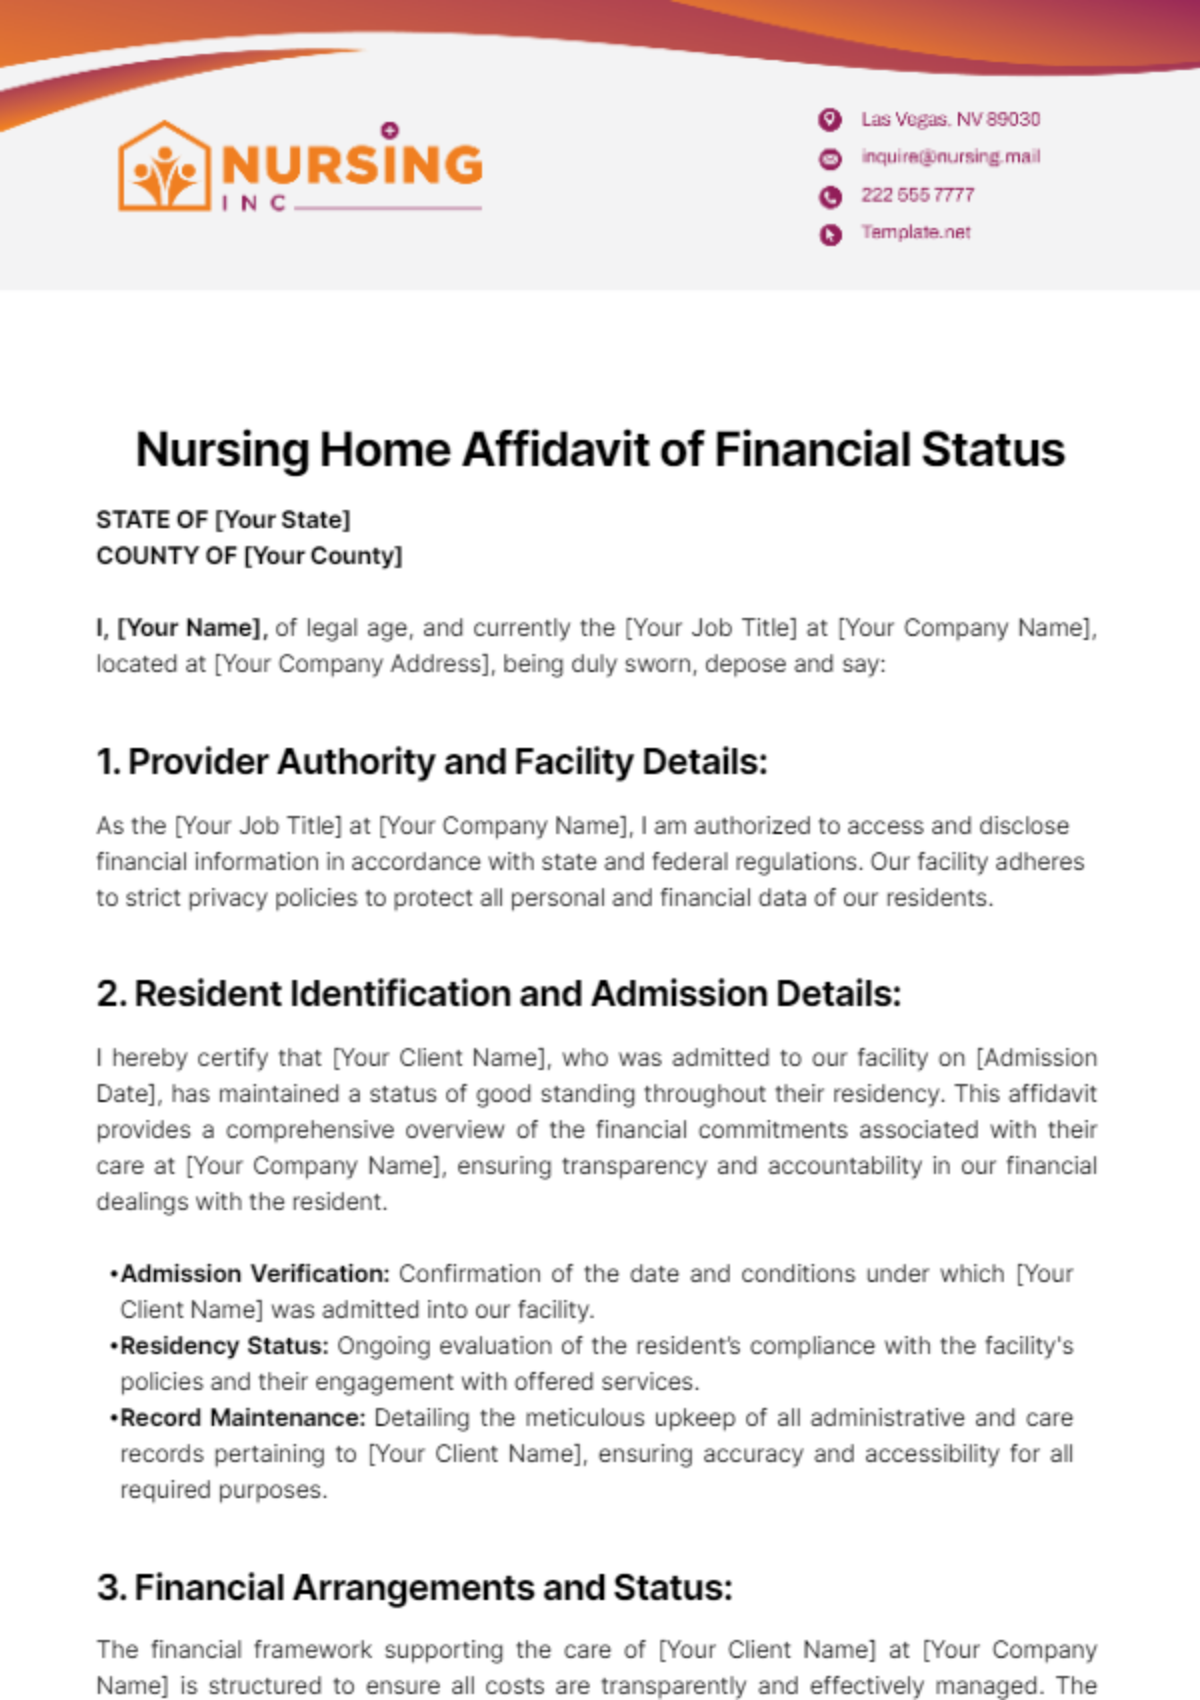 Nursing Home Affidavit of Financial Status Template